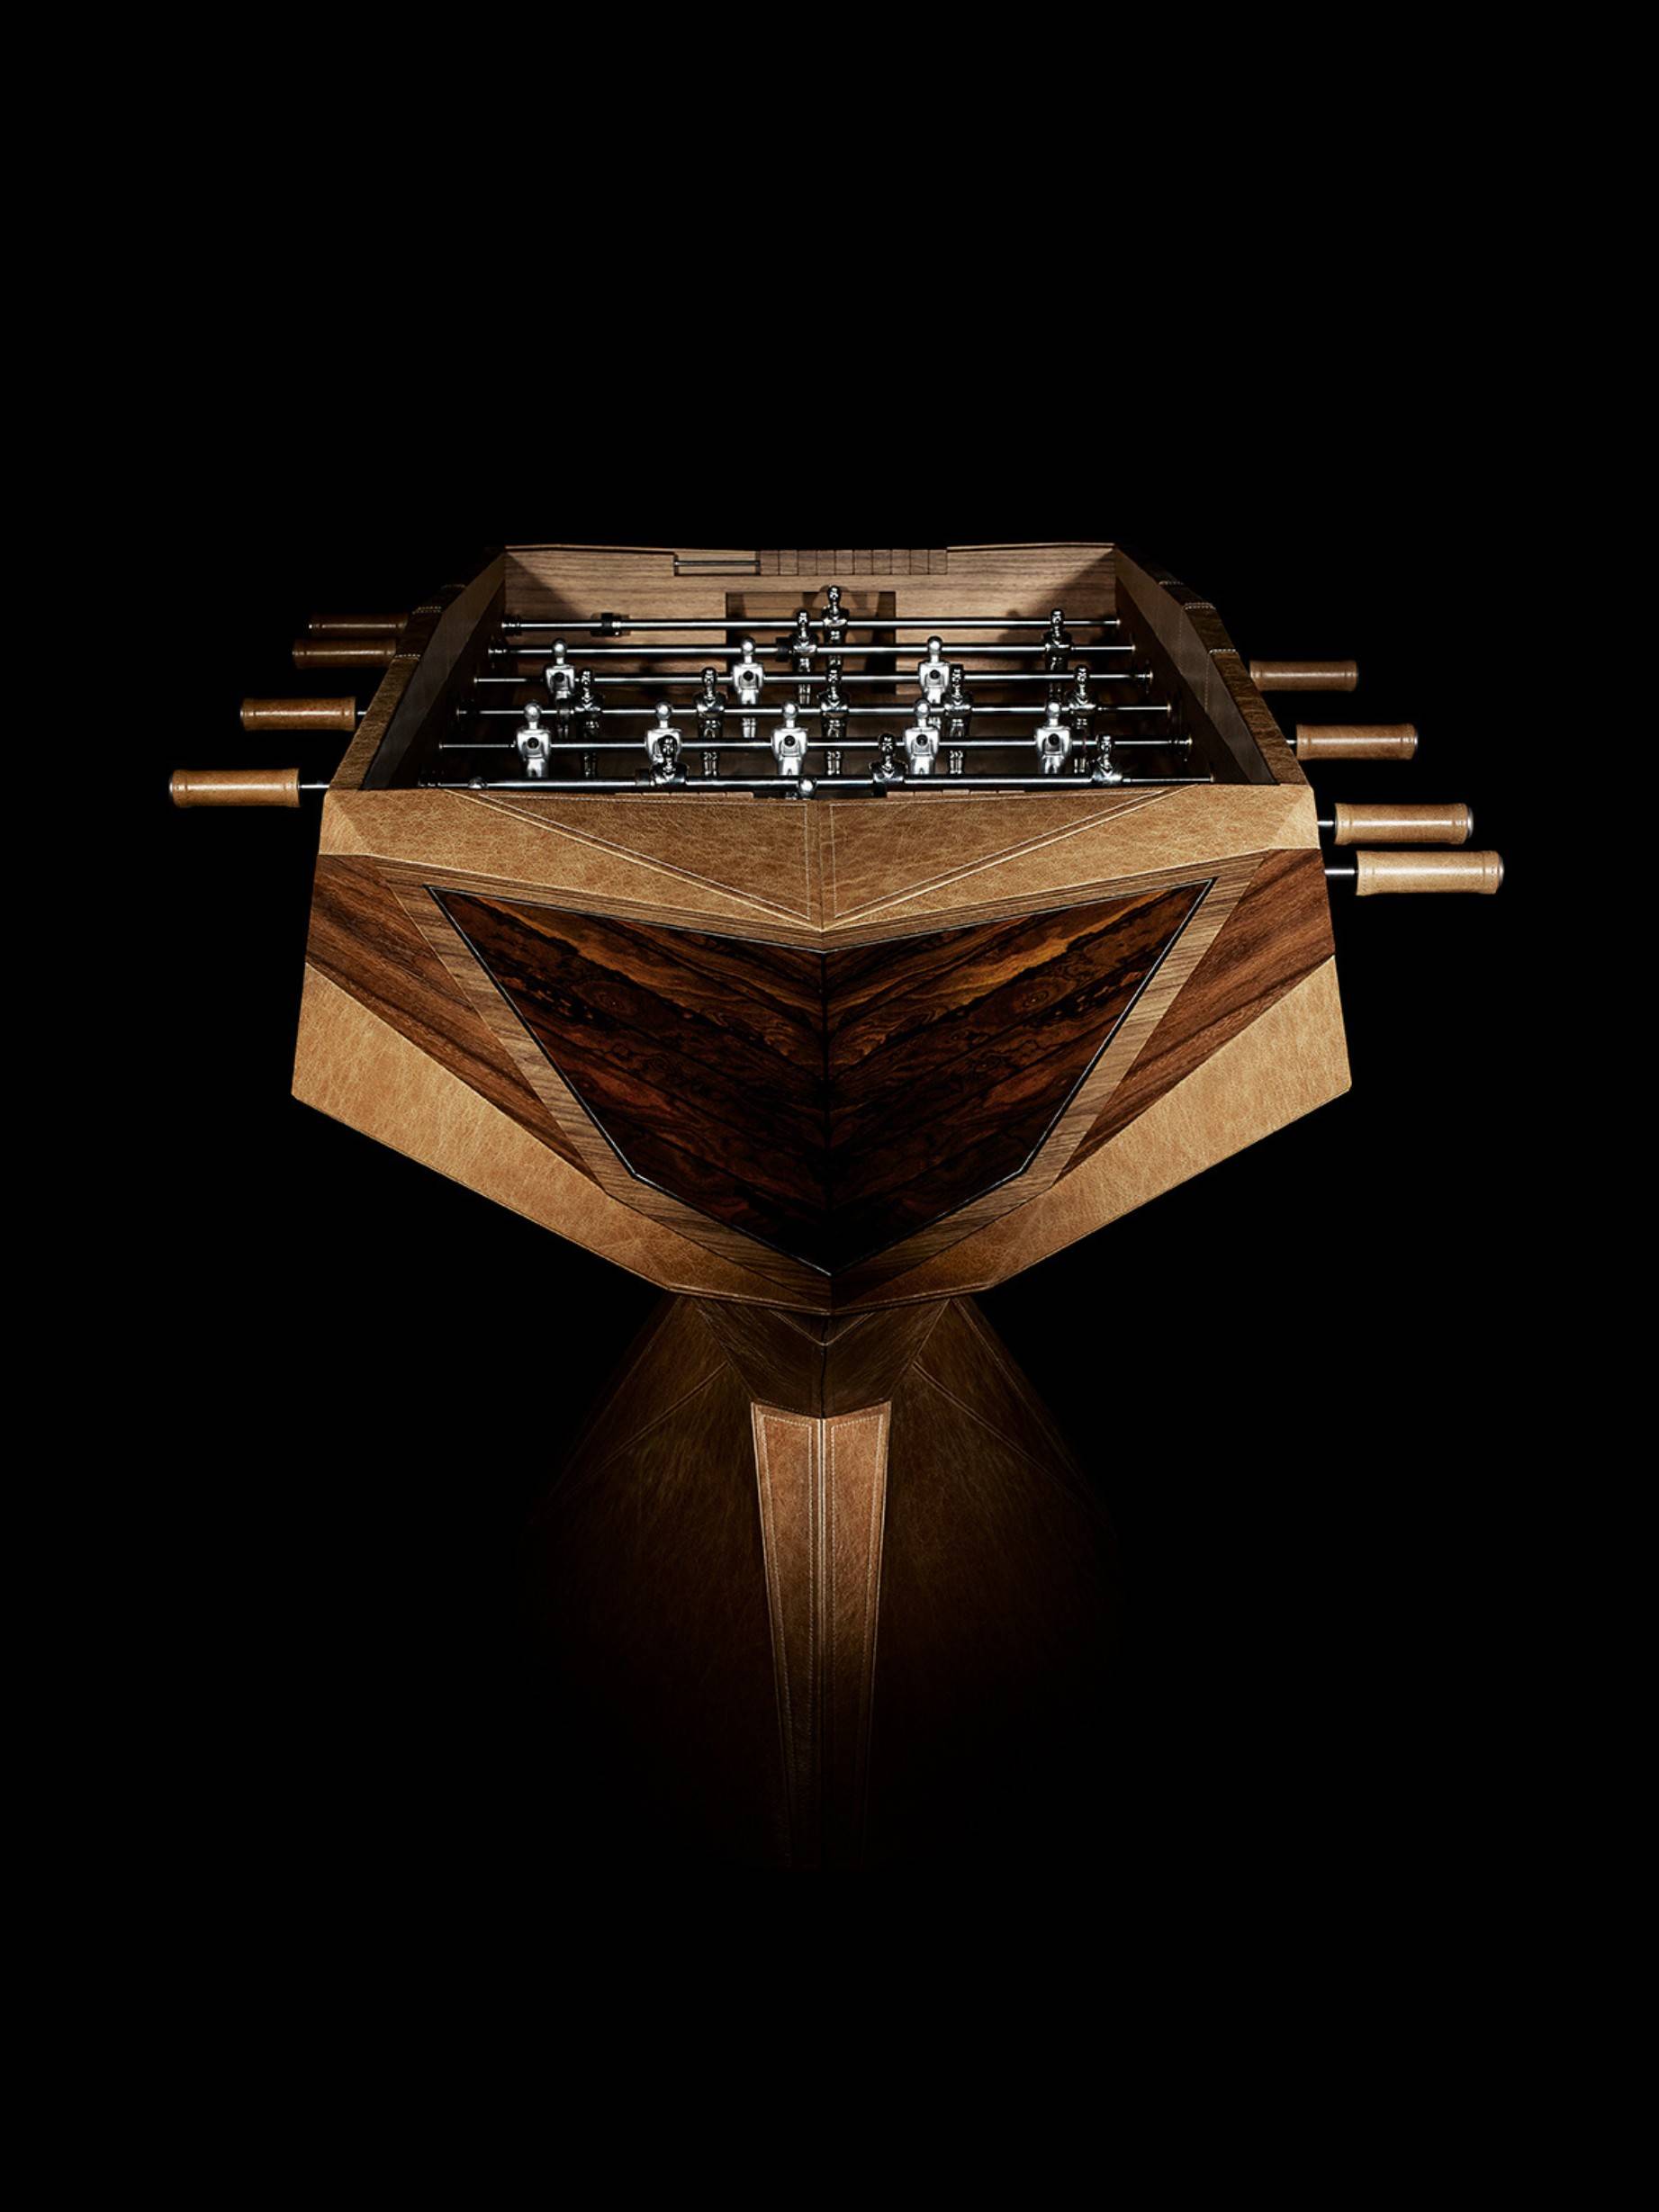 LINLEY Bespoke Games Tables | Bespoke Design & Luxury Furniture